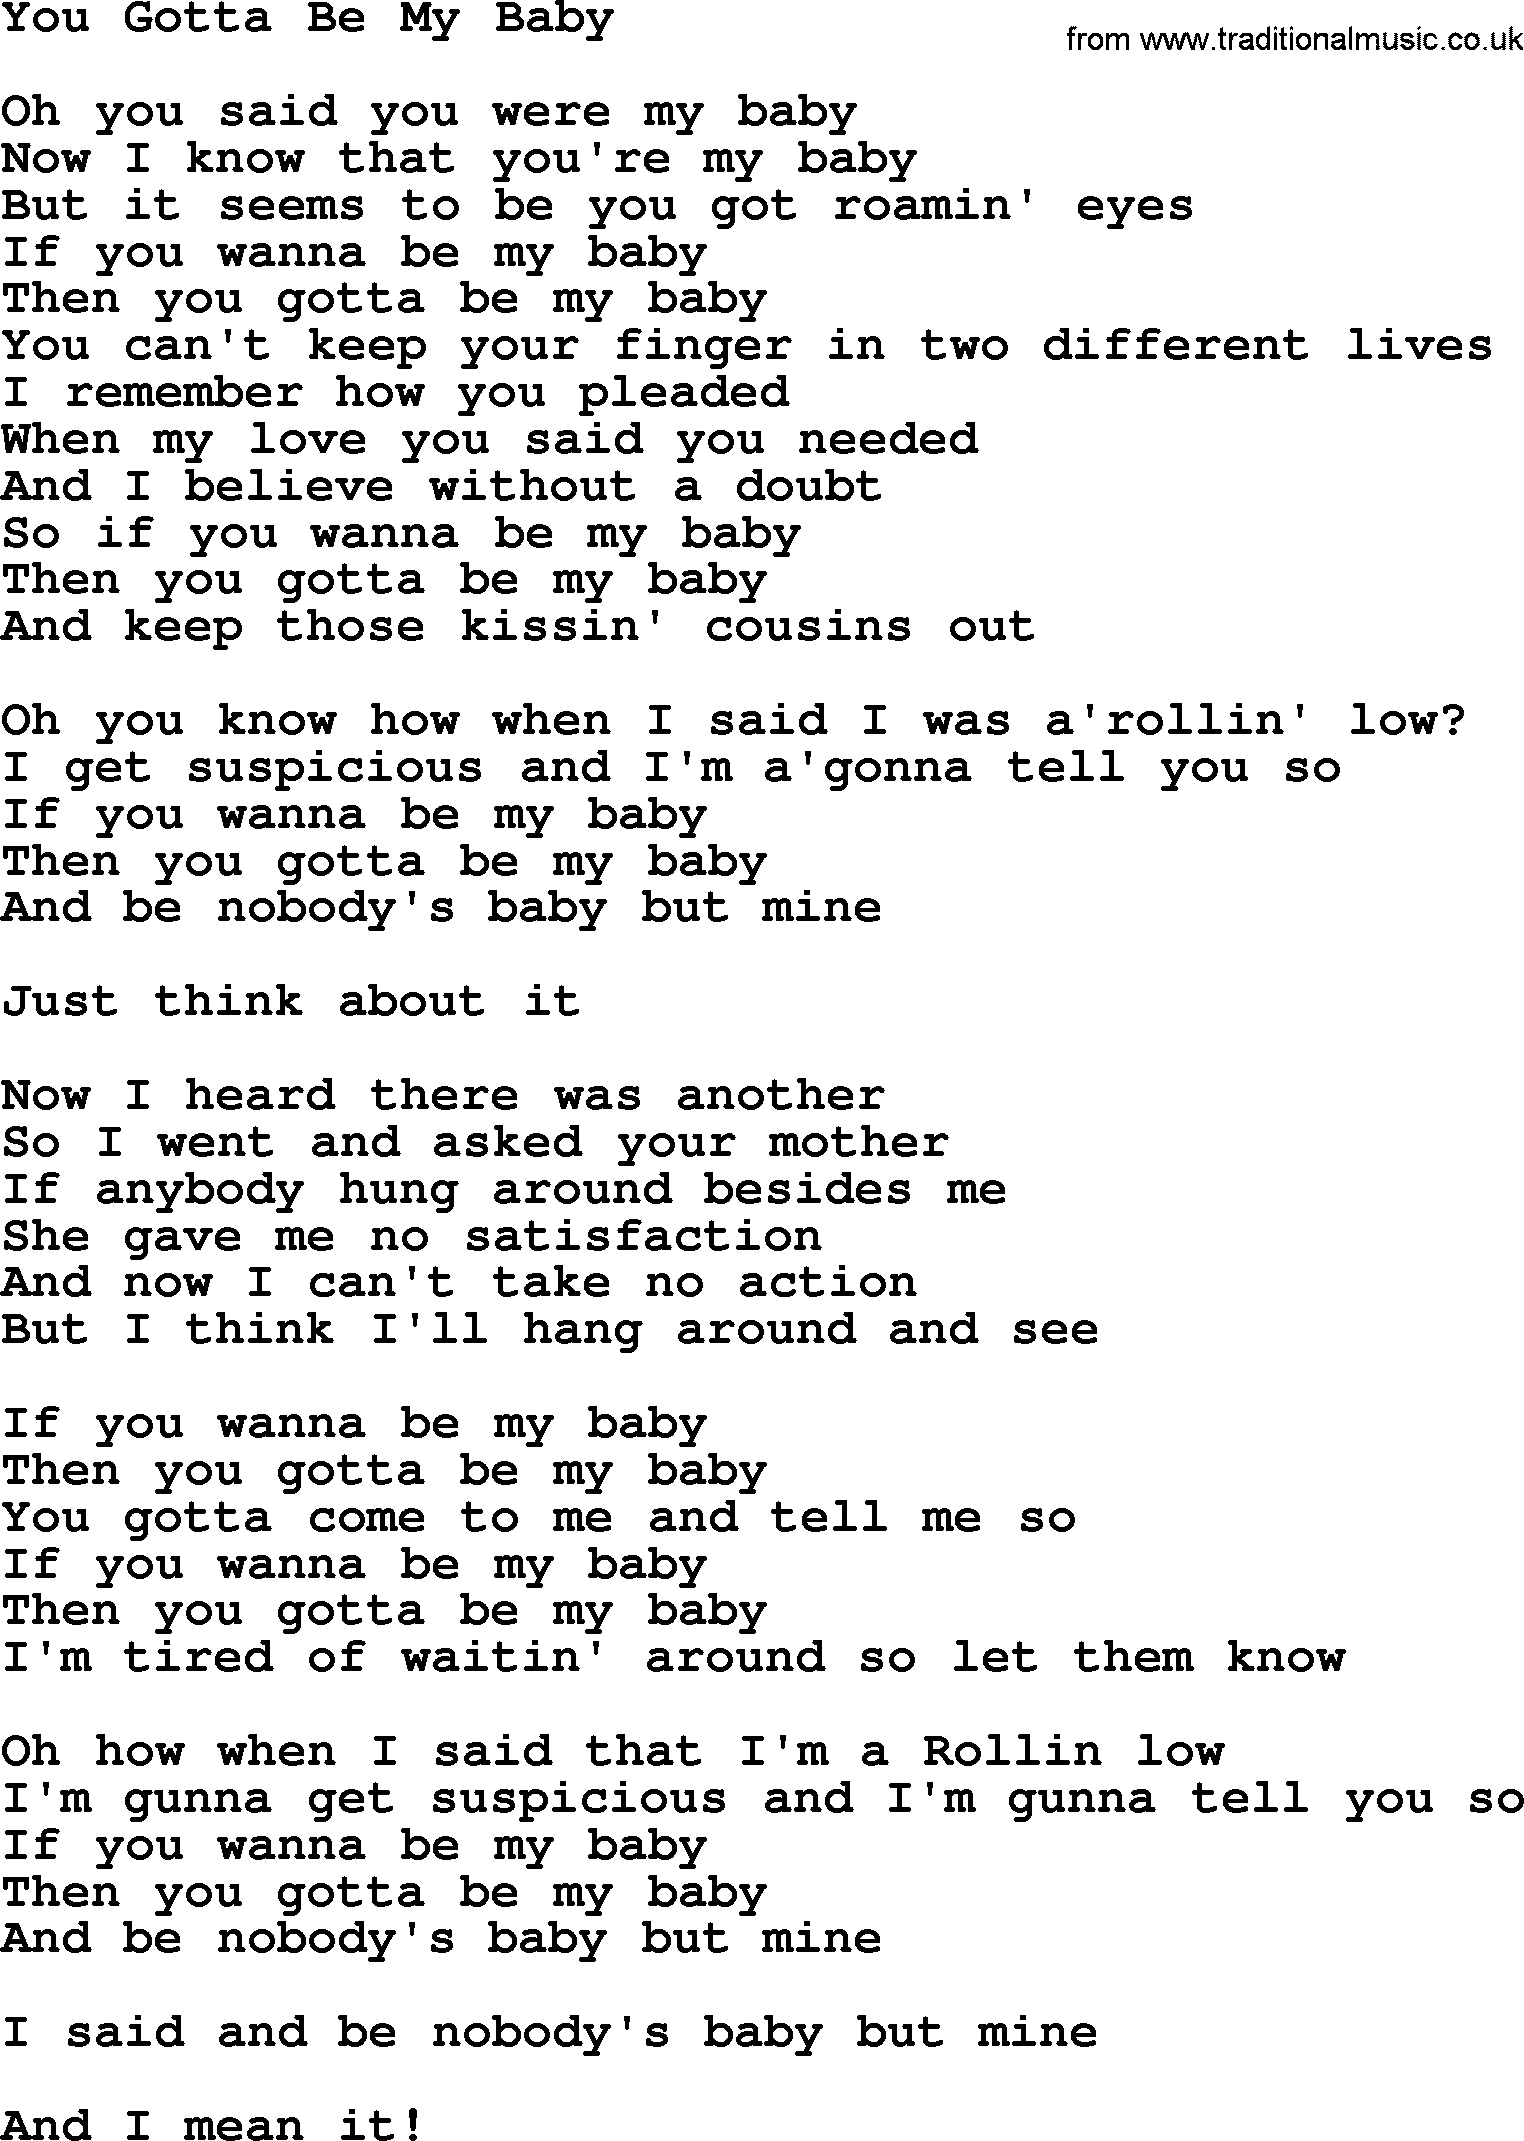 Dolly Parton song You Gotta Be My Baby.txt lyrics